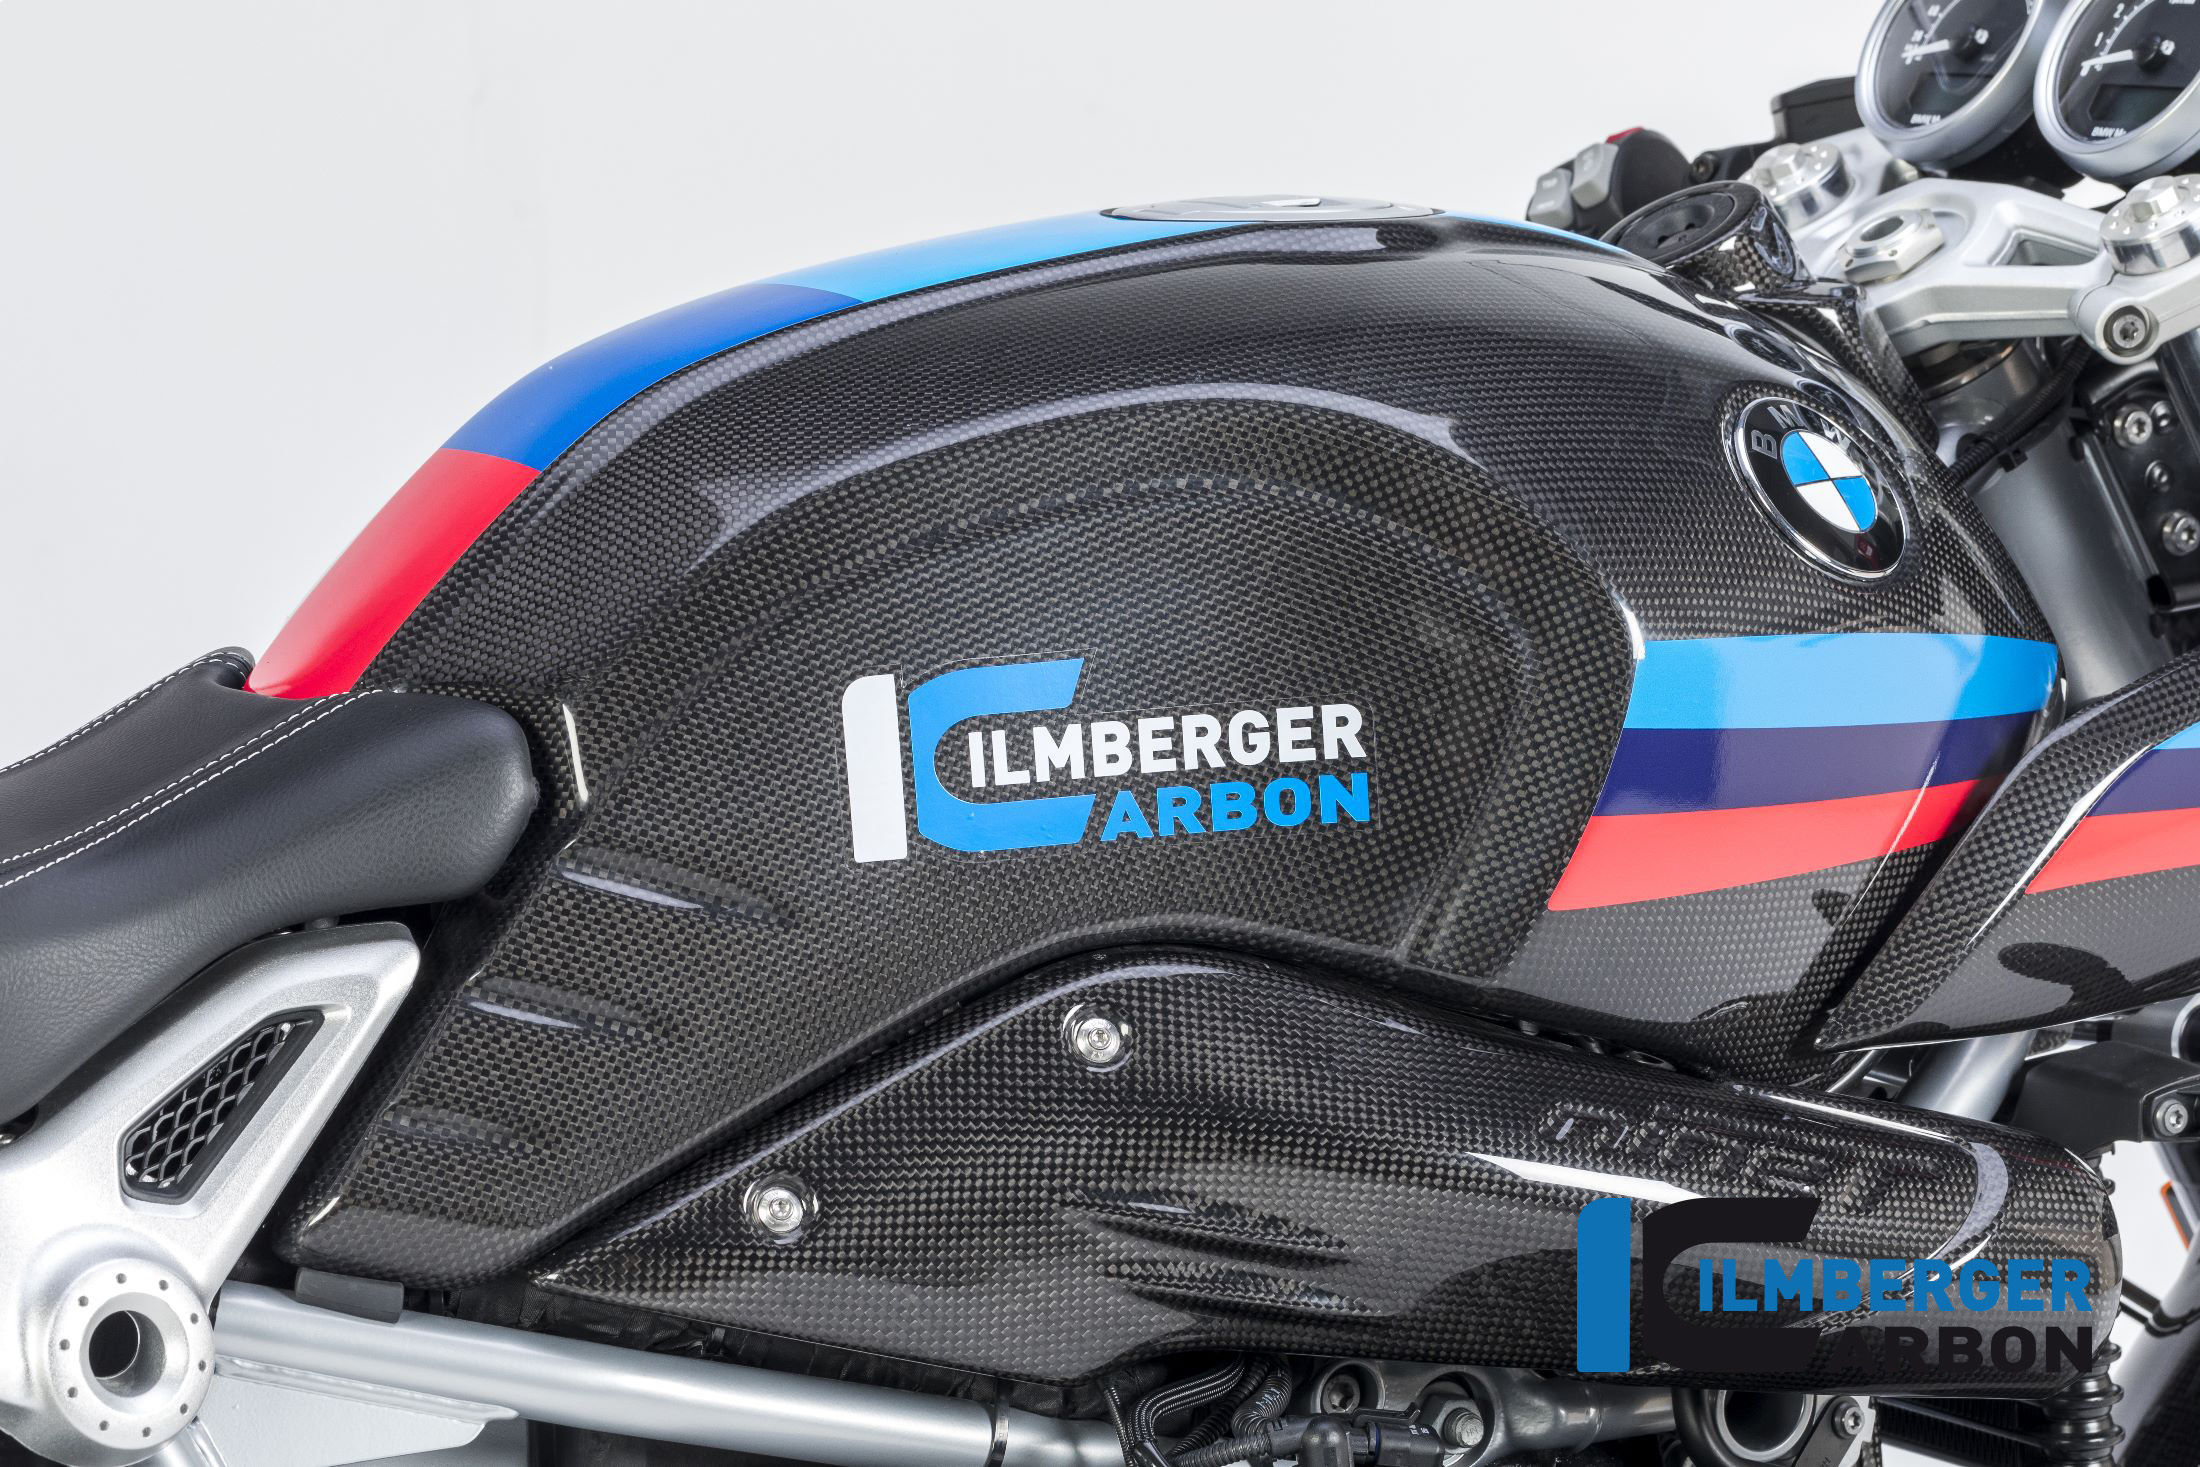 R nineT Racer (ab 2017) Ilmberger Carbon